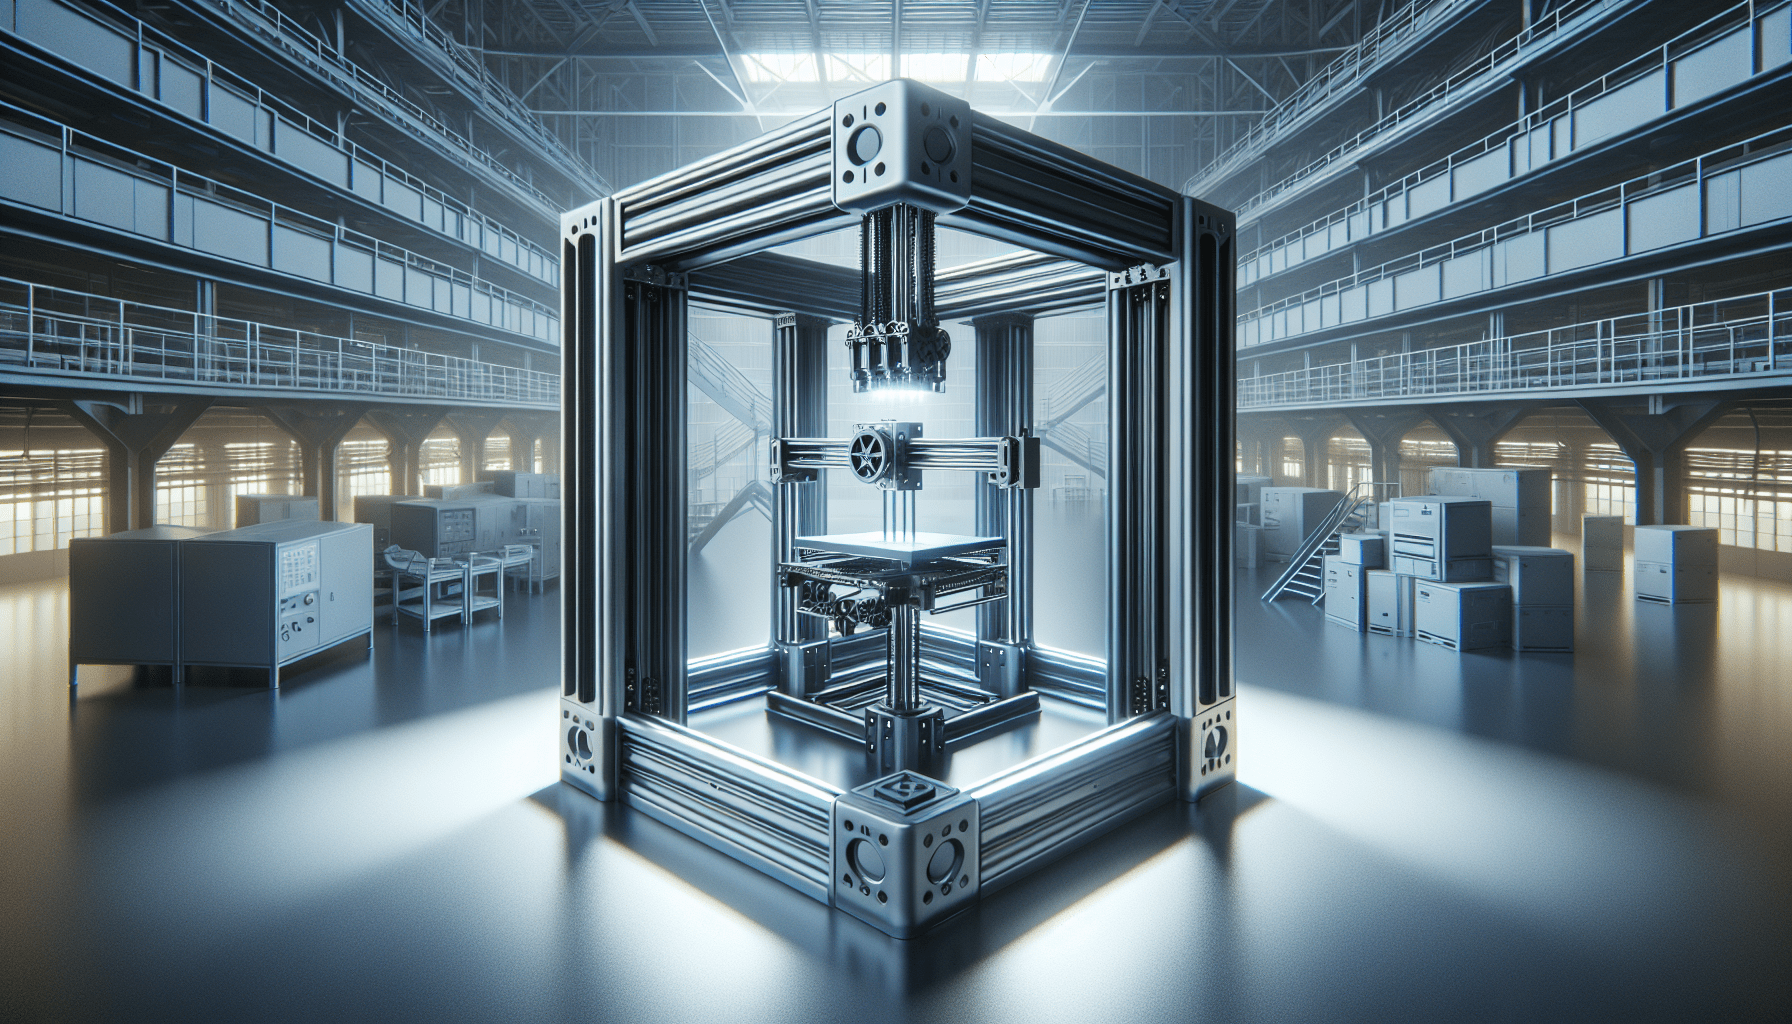 tekniker-unveils-3-meter-tall-metal-3d-printer-at-biemh Tekniker Unveils 3 Meter Tall Metal 3D Printer at BIEMH